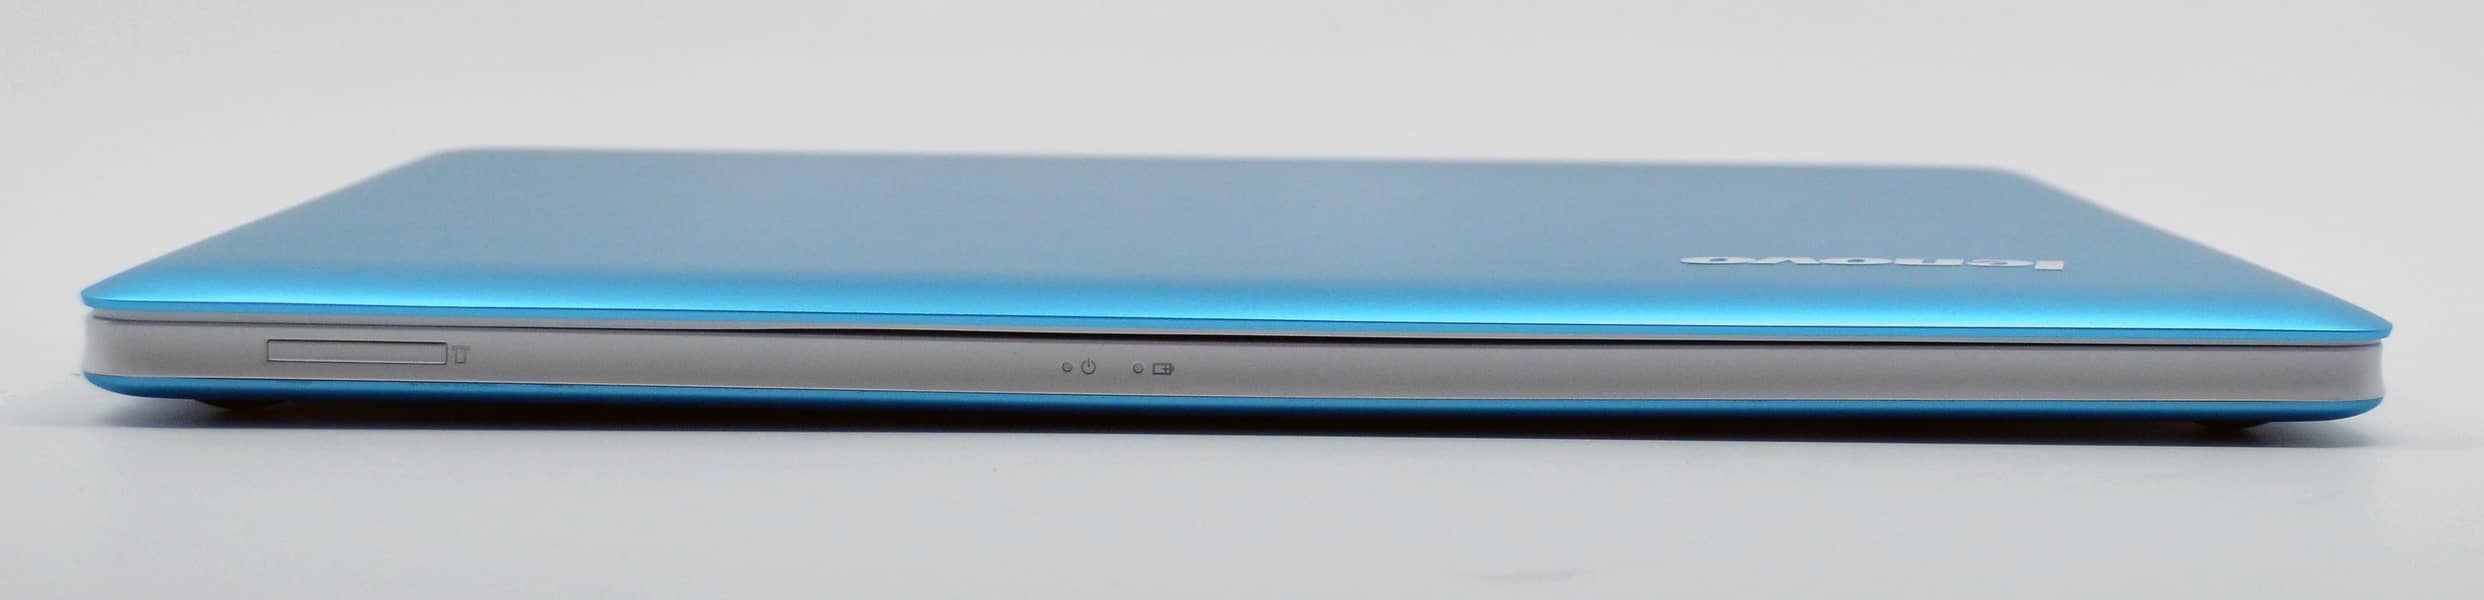 Lenovo Ideapad U310 - Aqua Blue_Best forOnline & Educational Purpose 1